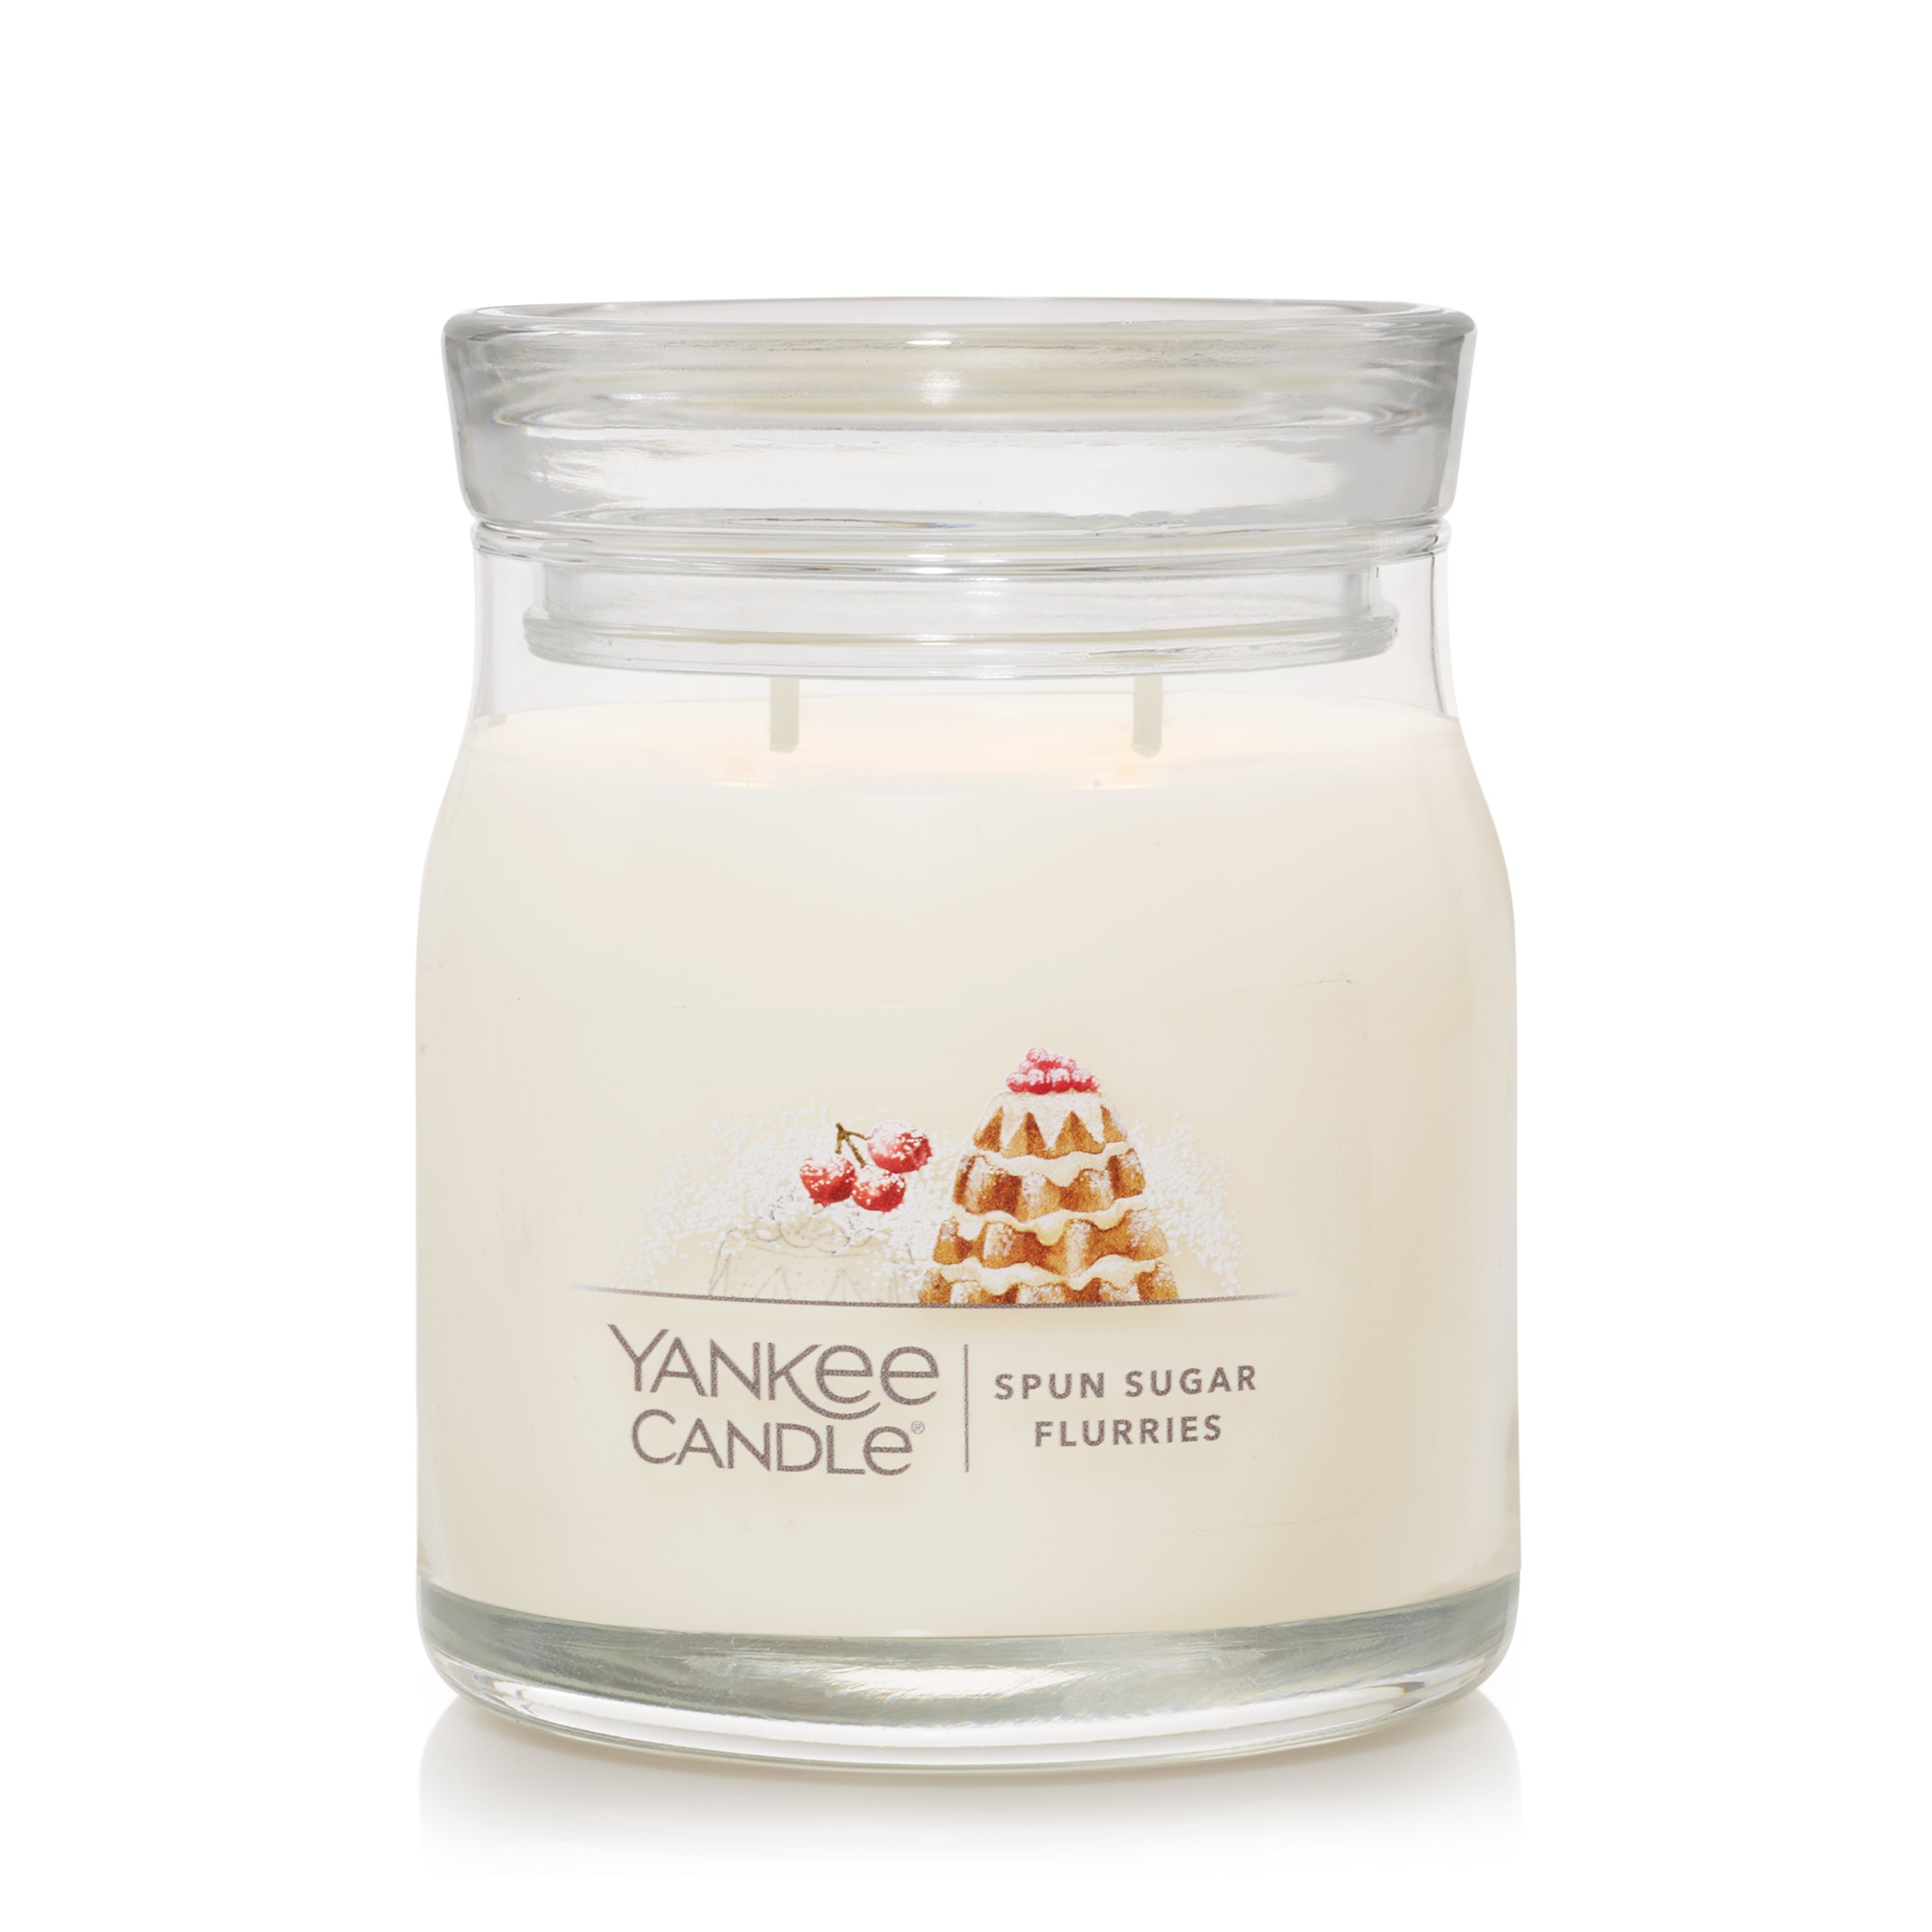 Yankee Candle Spun Sugar Flurries Fragranced Wax Melts